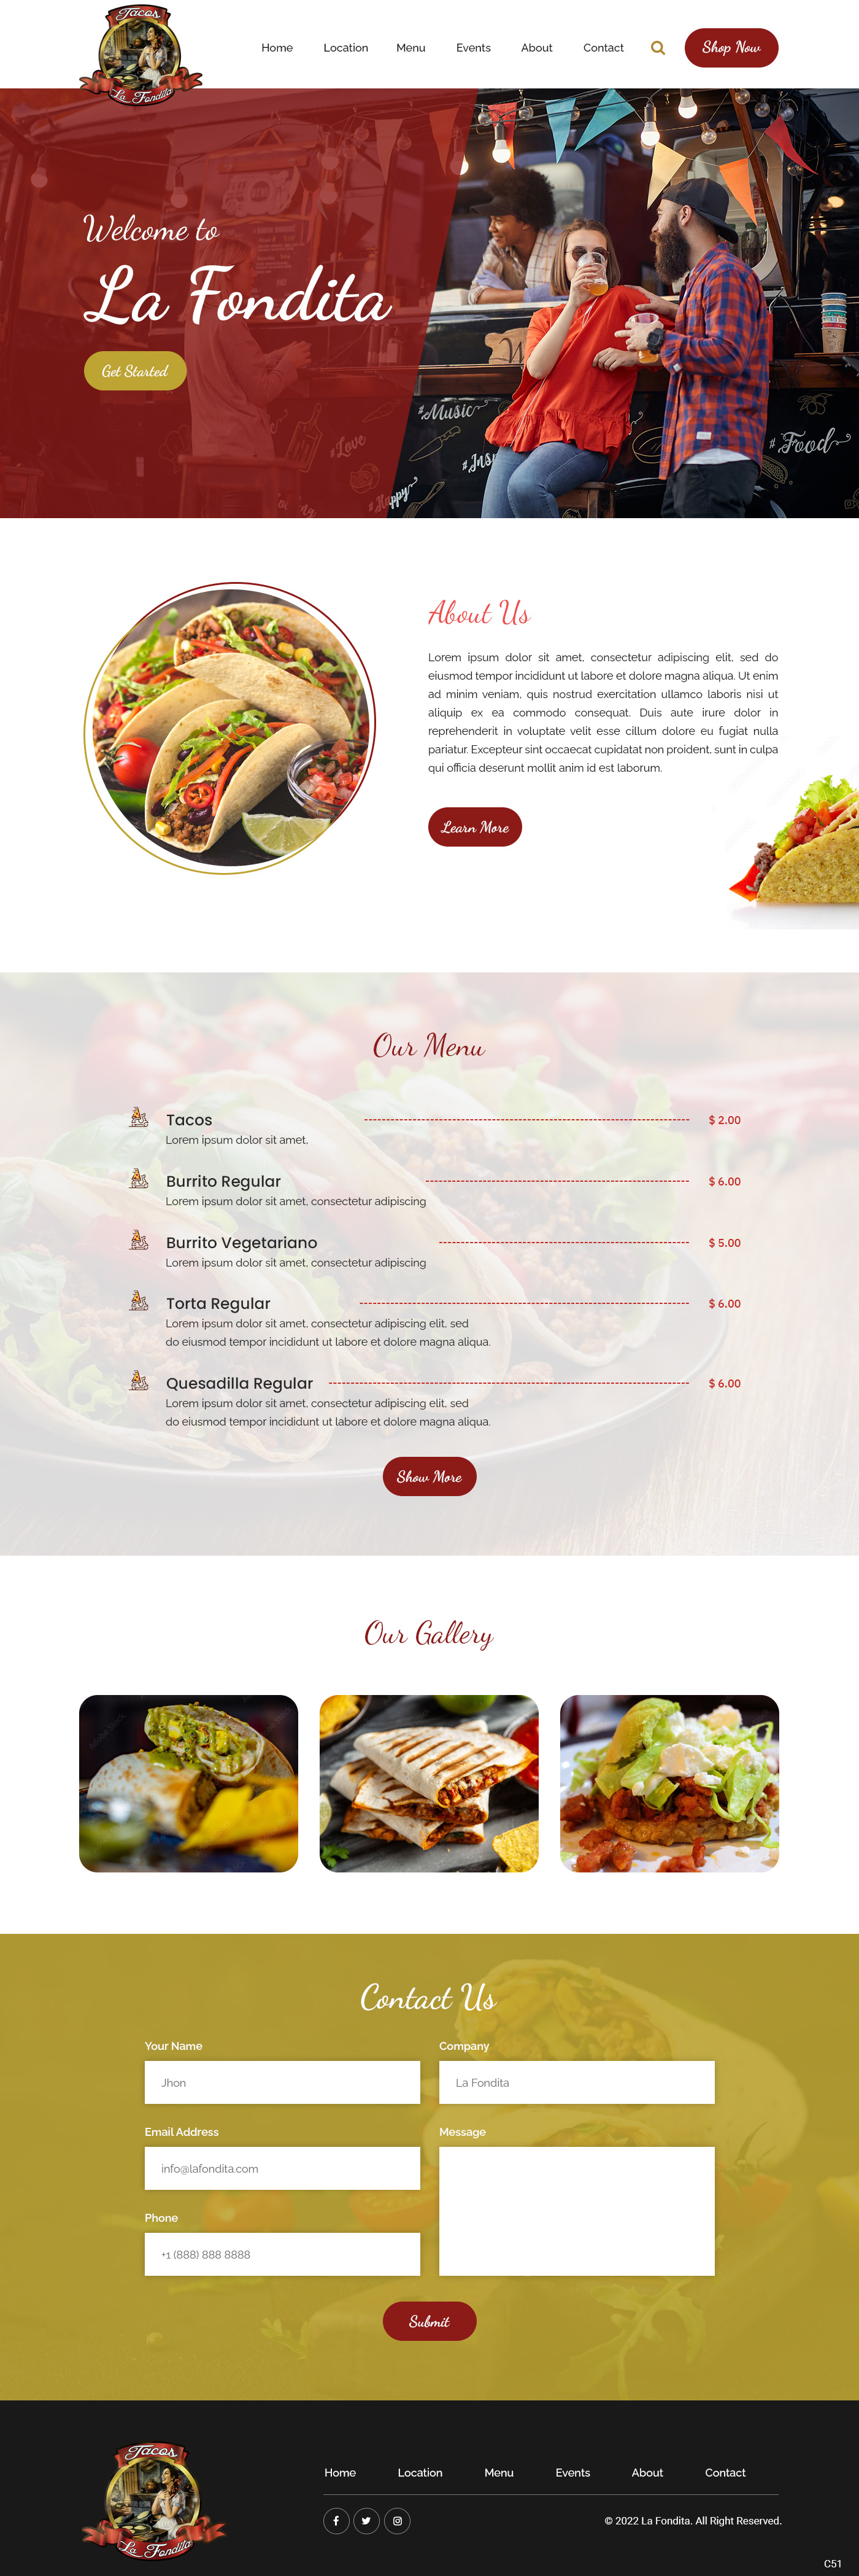 Food or Taco Truck website design example